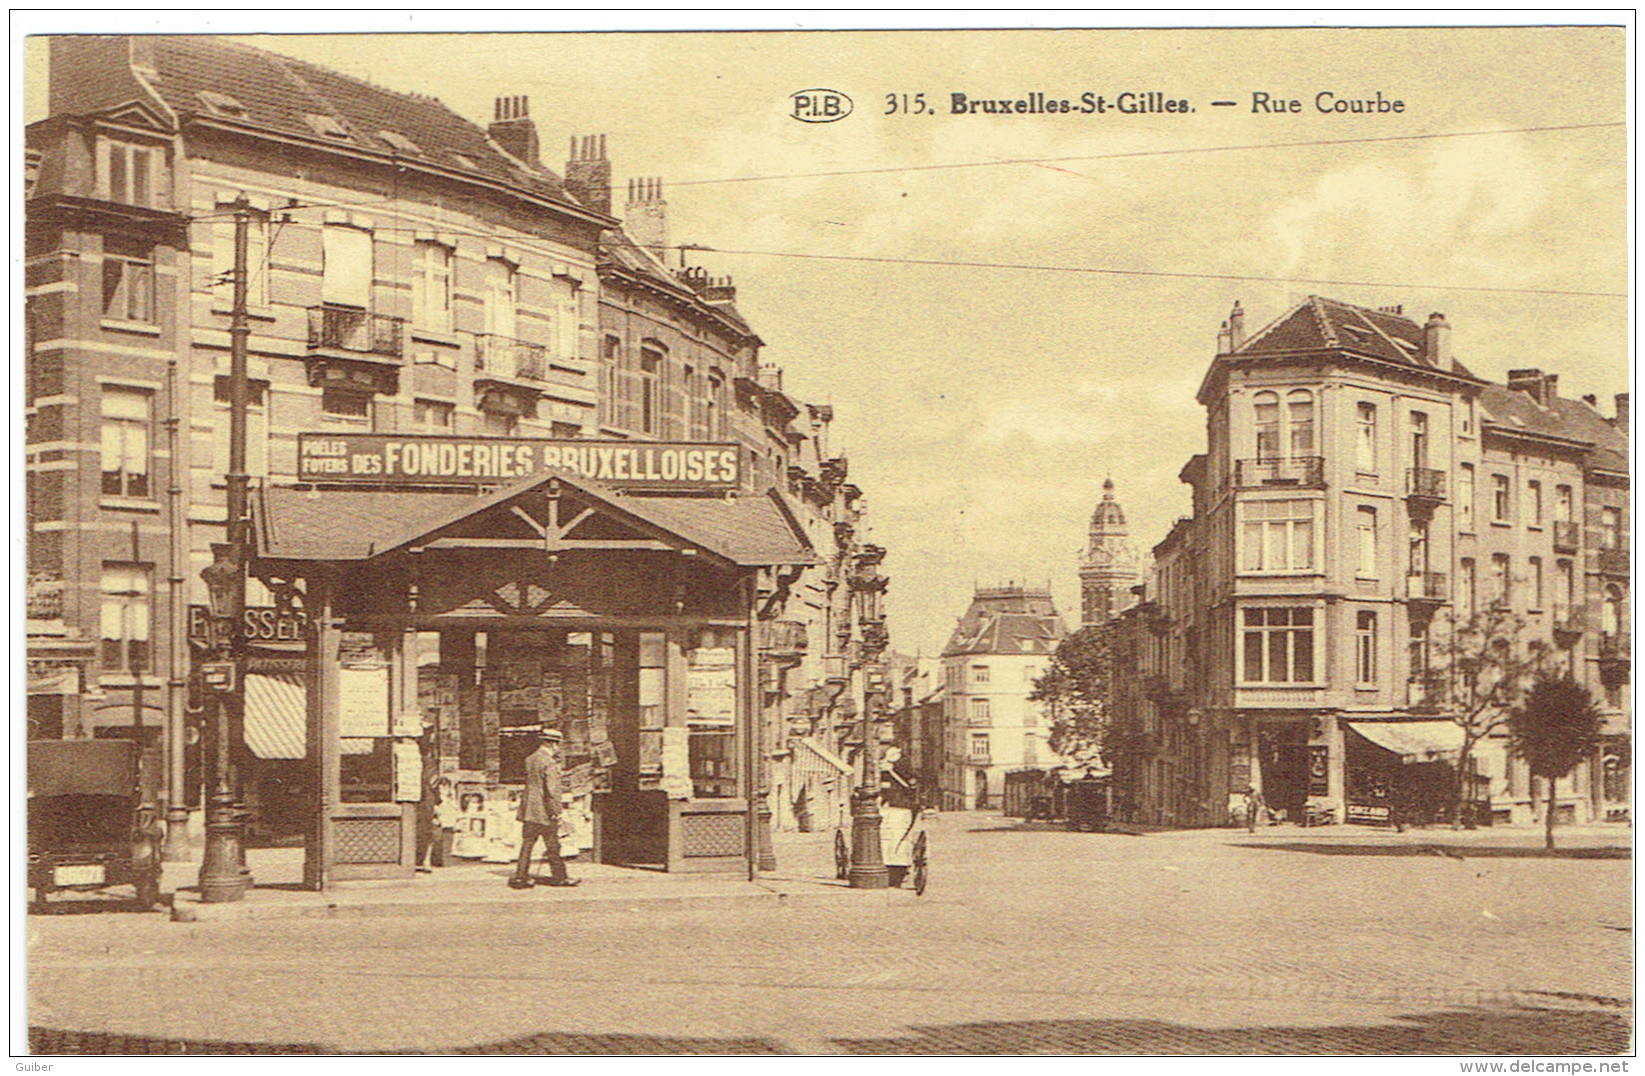 Bruxelles Saint Gilles Rue Courbe N° 315 Patisserie, Fonderies Bruxelloises - St-Gilles - St-Gillis